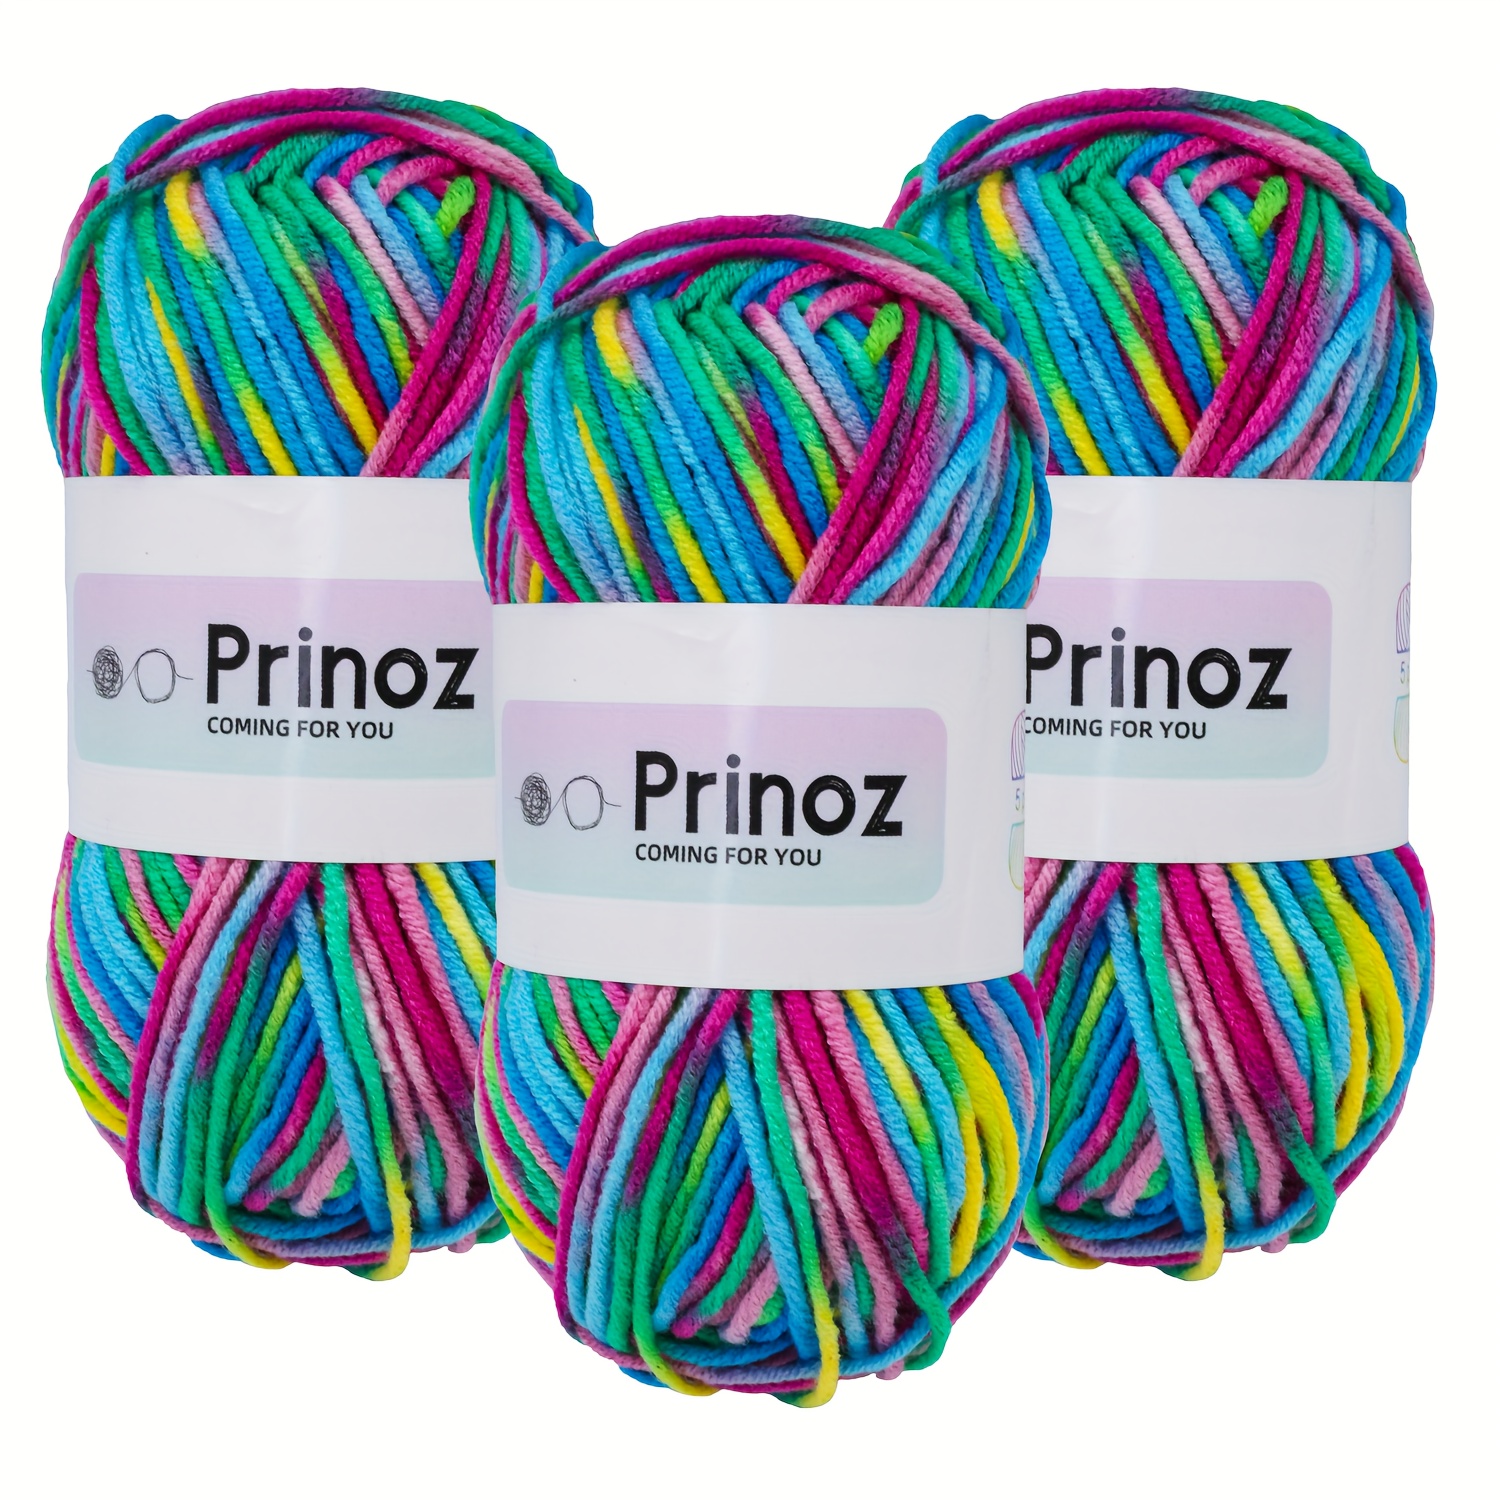 

3rolls 5 Strands Of Colored Yarn, Diy Yarn For Crocheting And Knitting Sweaters, Dolls, Hats, Flowers, Etc 50g/1.76oz Acrylic Yarn